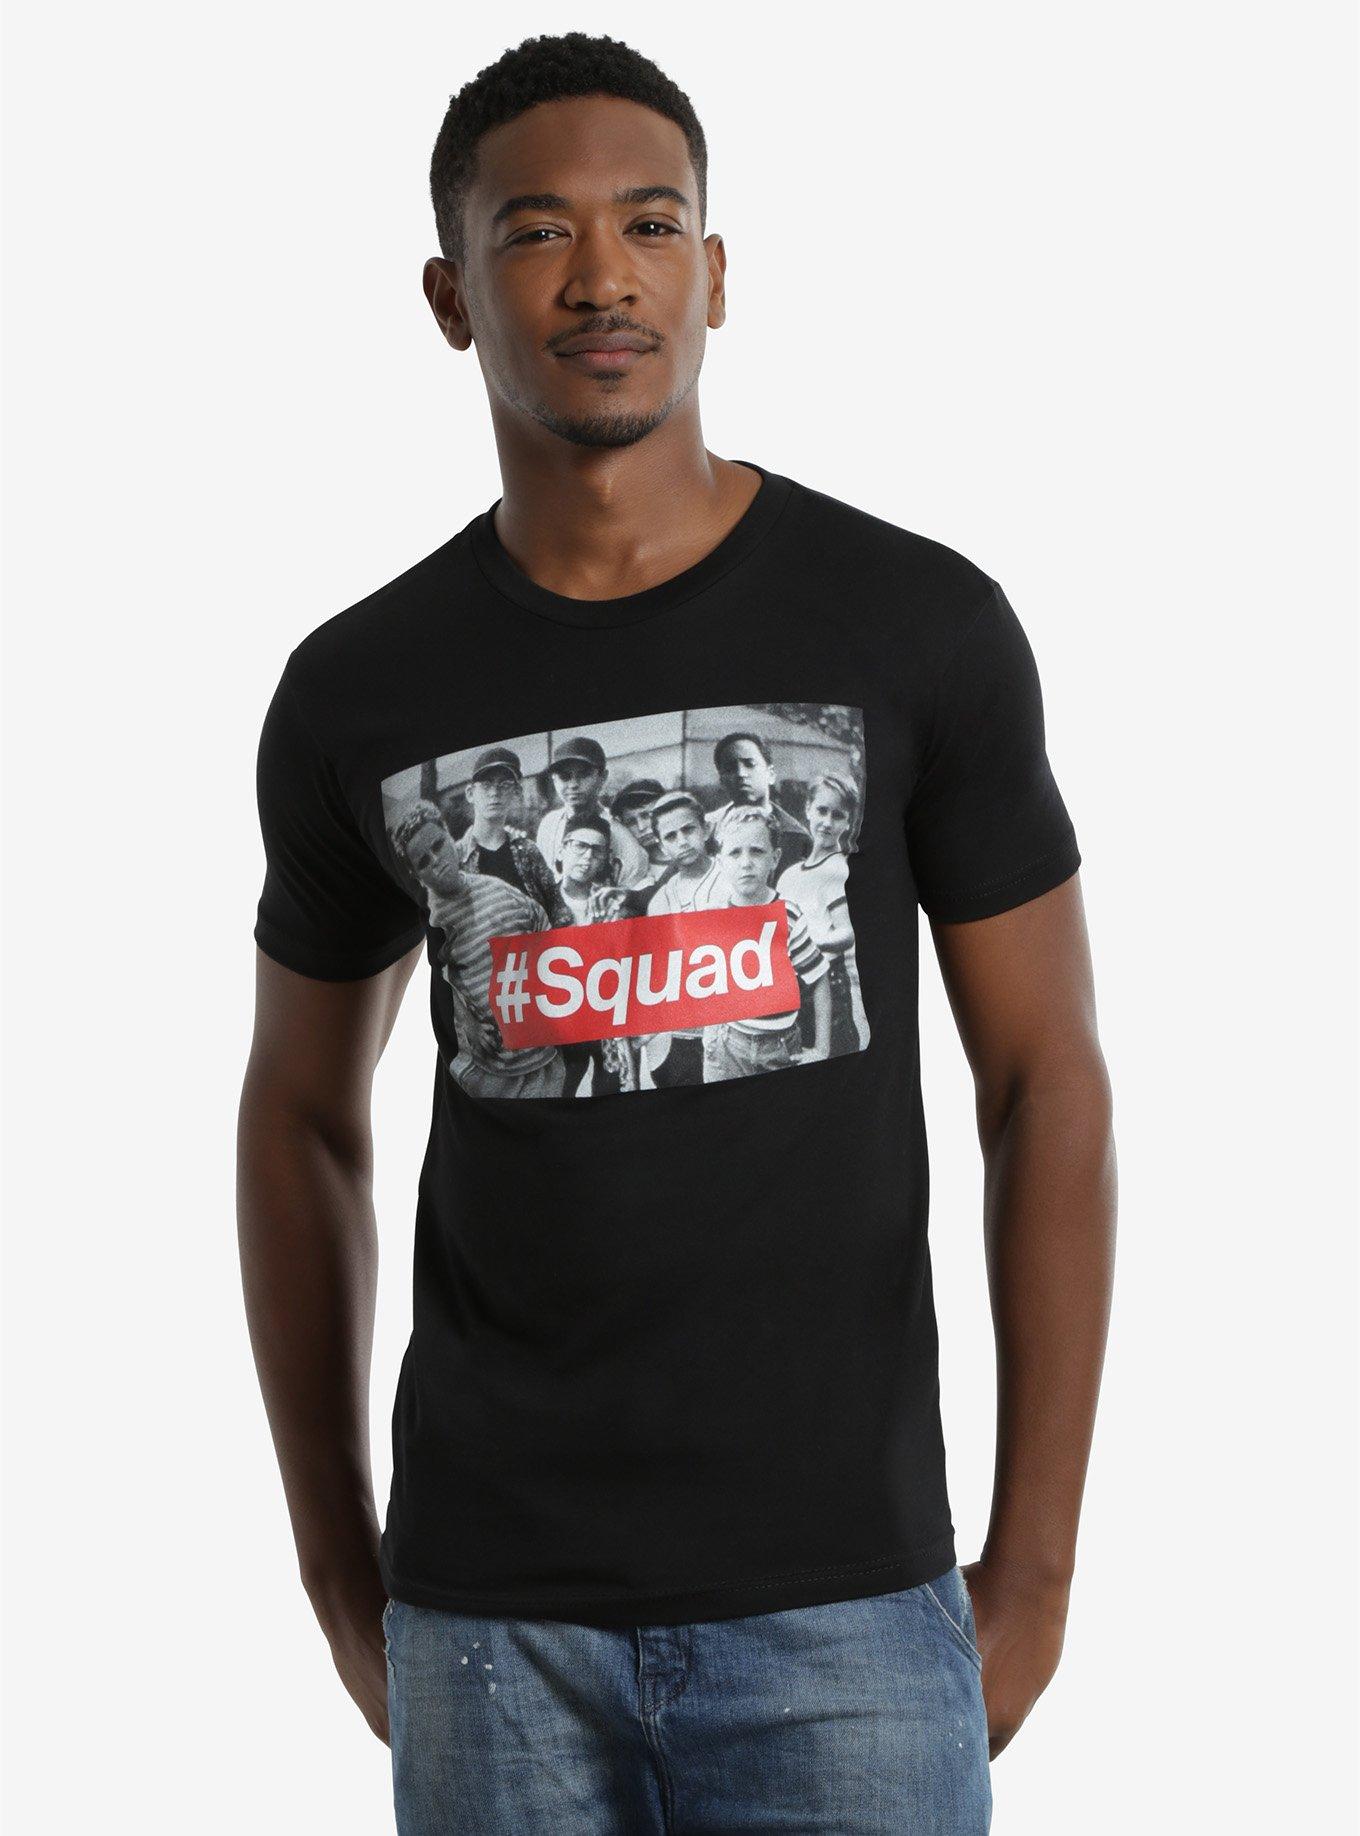 The Sandlot #Squad T-Shirt, BLACK, hi-res